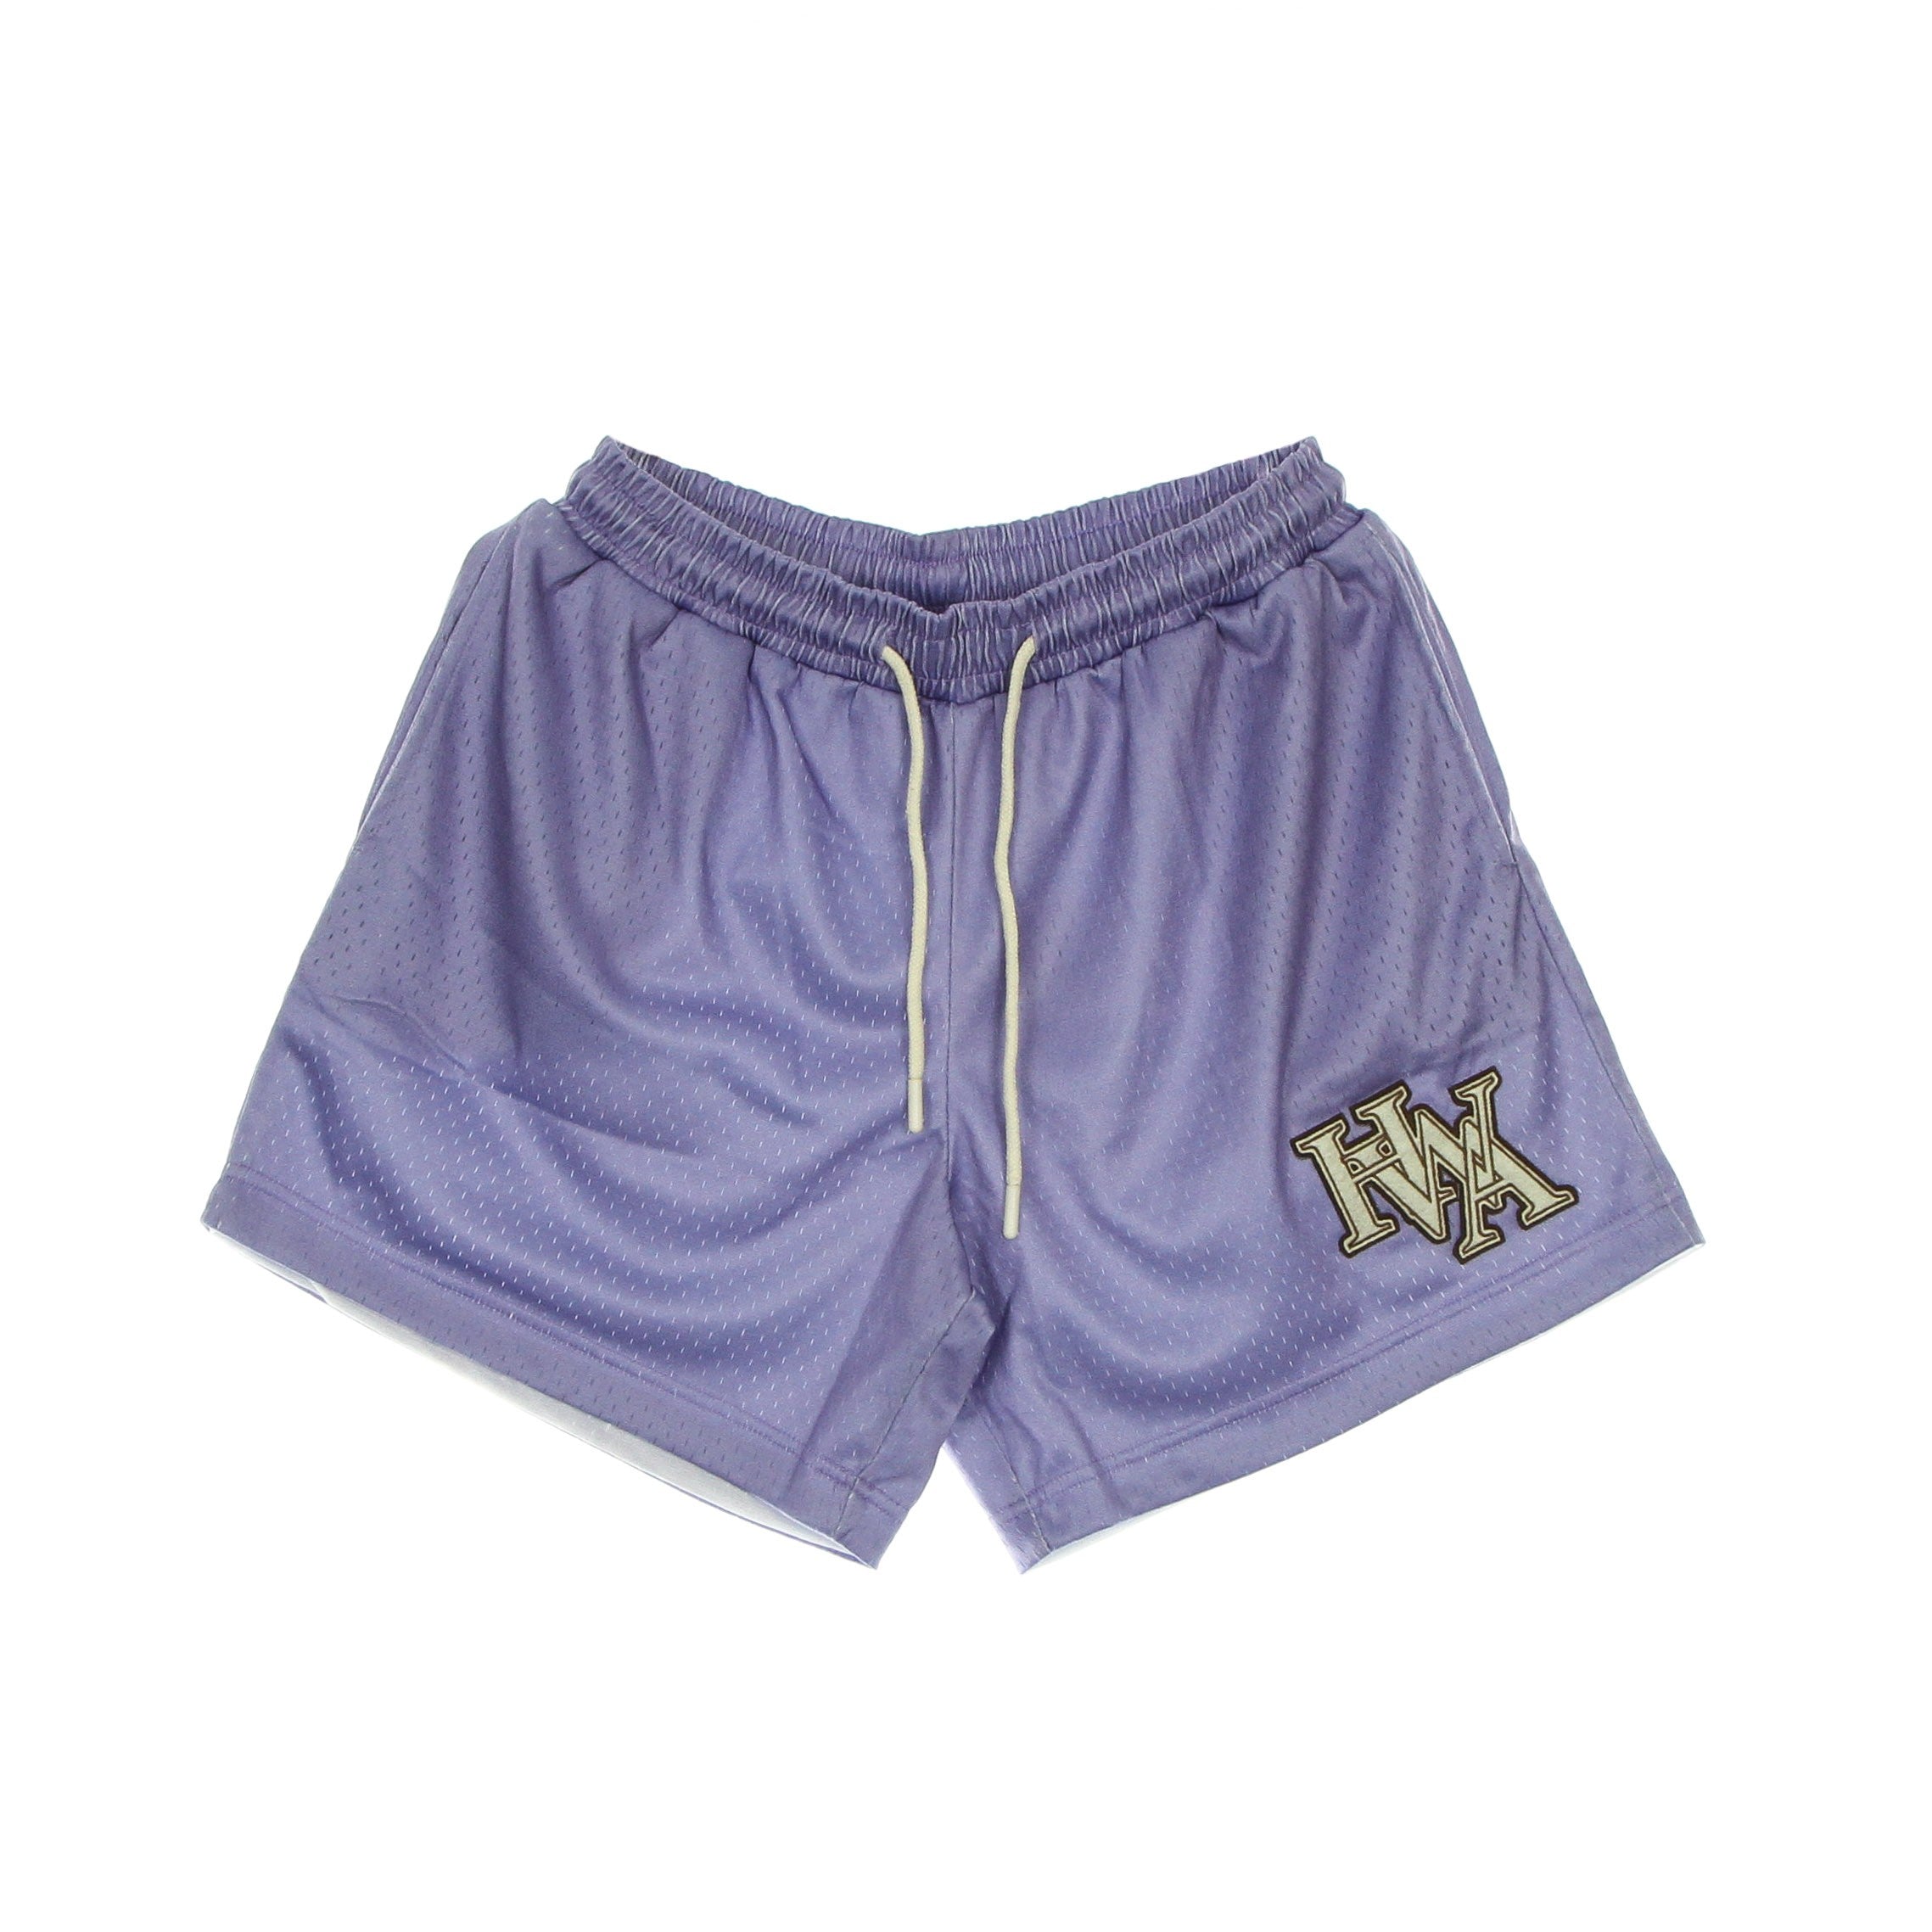 Allen Mesh Short Lavender Men's Shorts